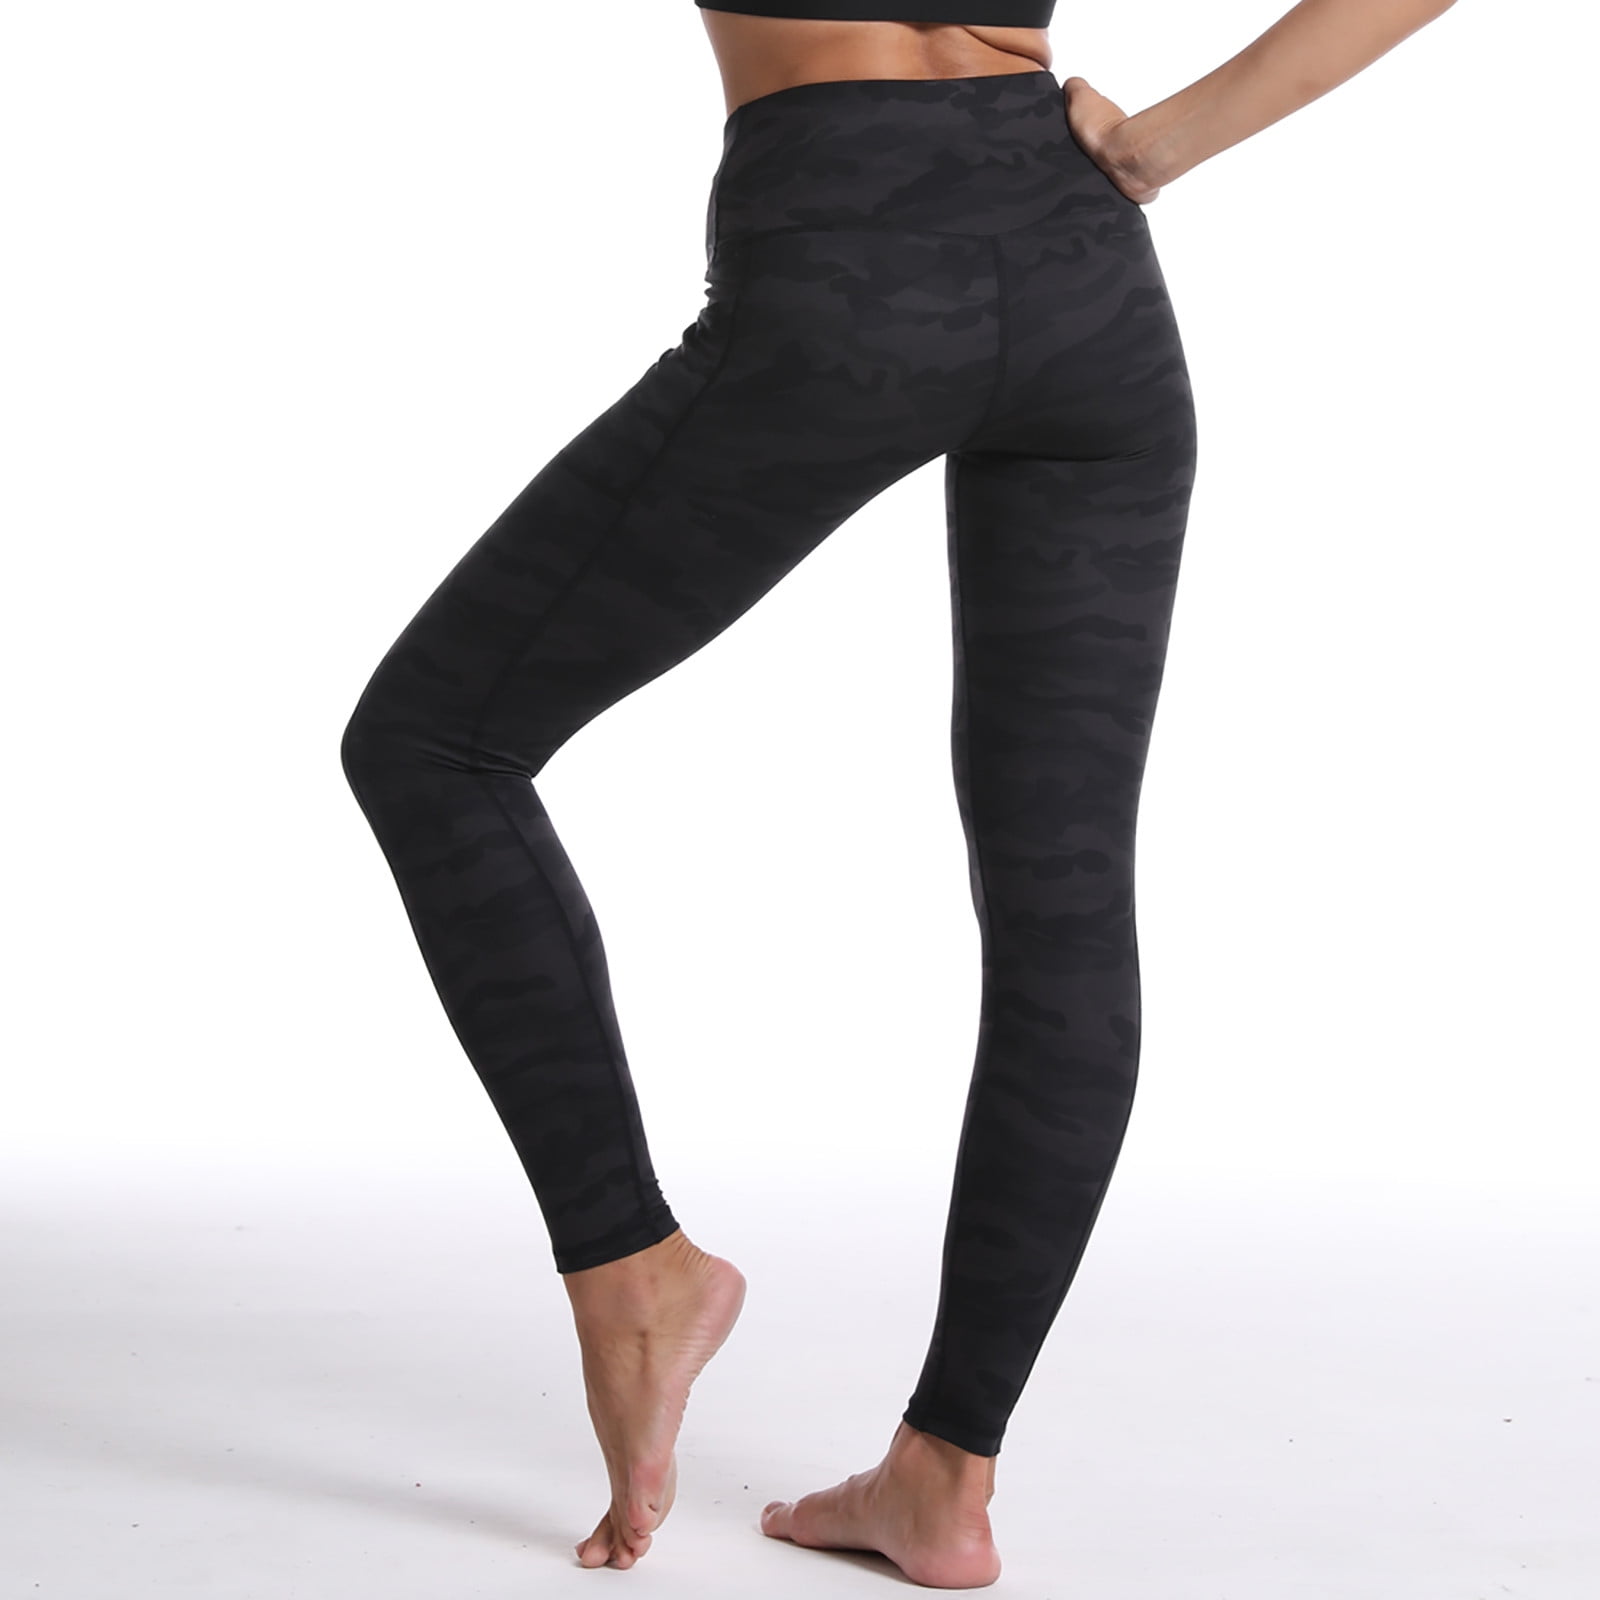 LWZWM Workout Legging 3D Printed Butt Lifting Yoga Pants for Women Teens  Girls Sports Fashion Casual High Waist Pocket Mesh Leggings Yoga Pants  Black L 